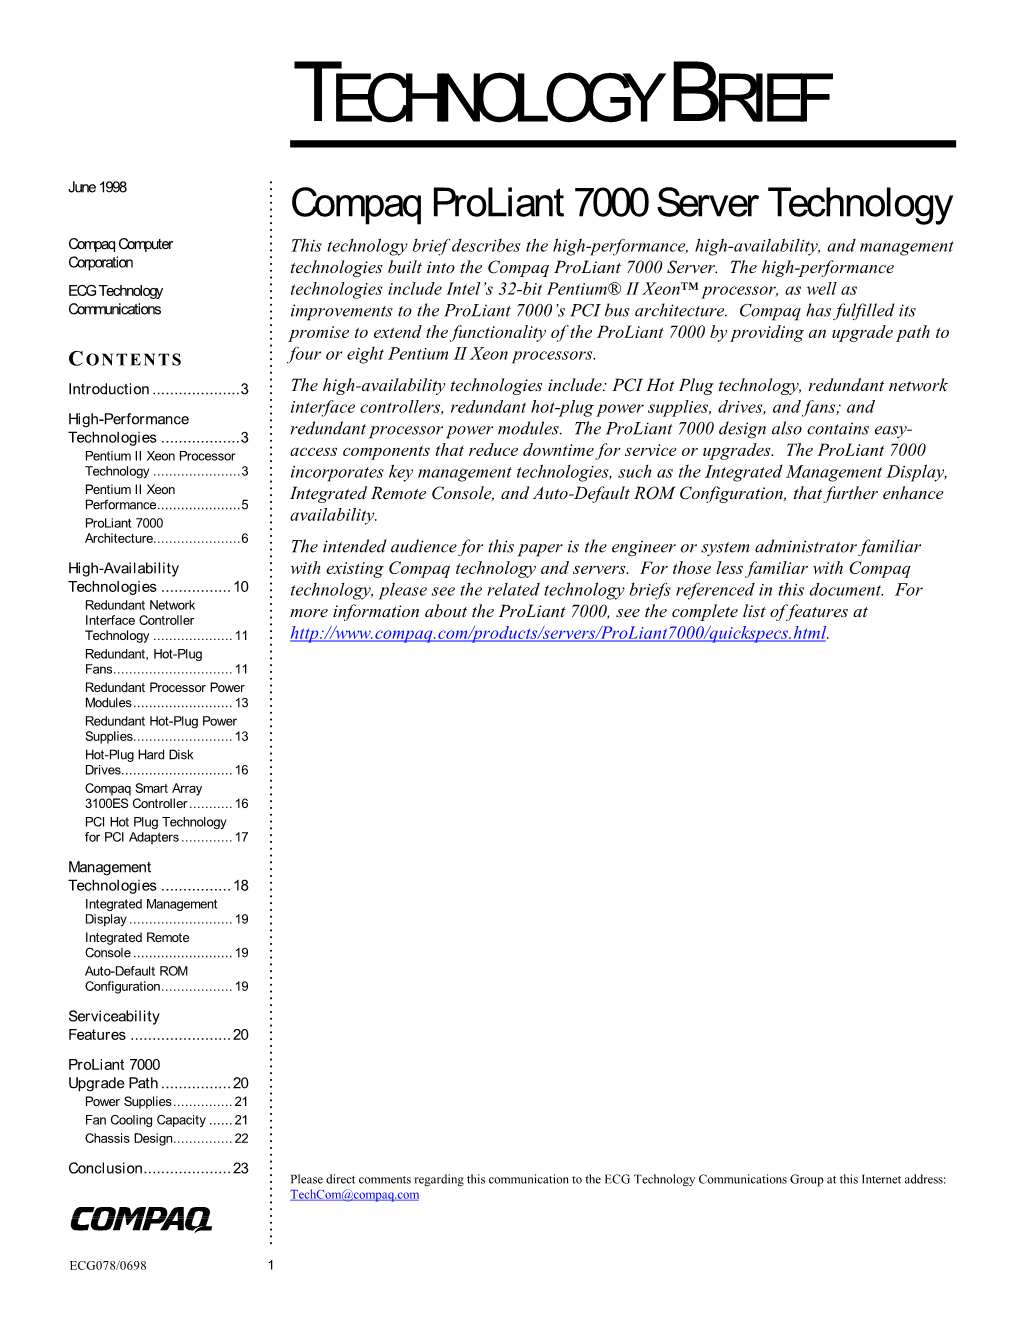 Compaq Proliant 7000 Server Technology